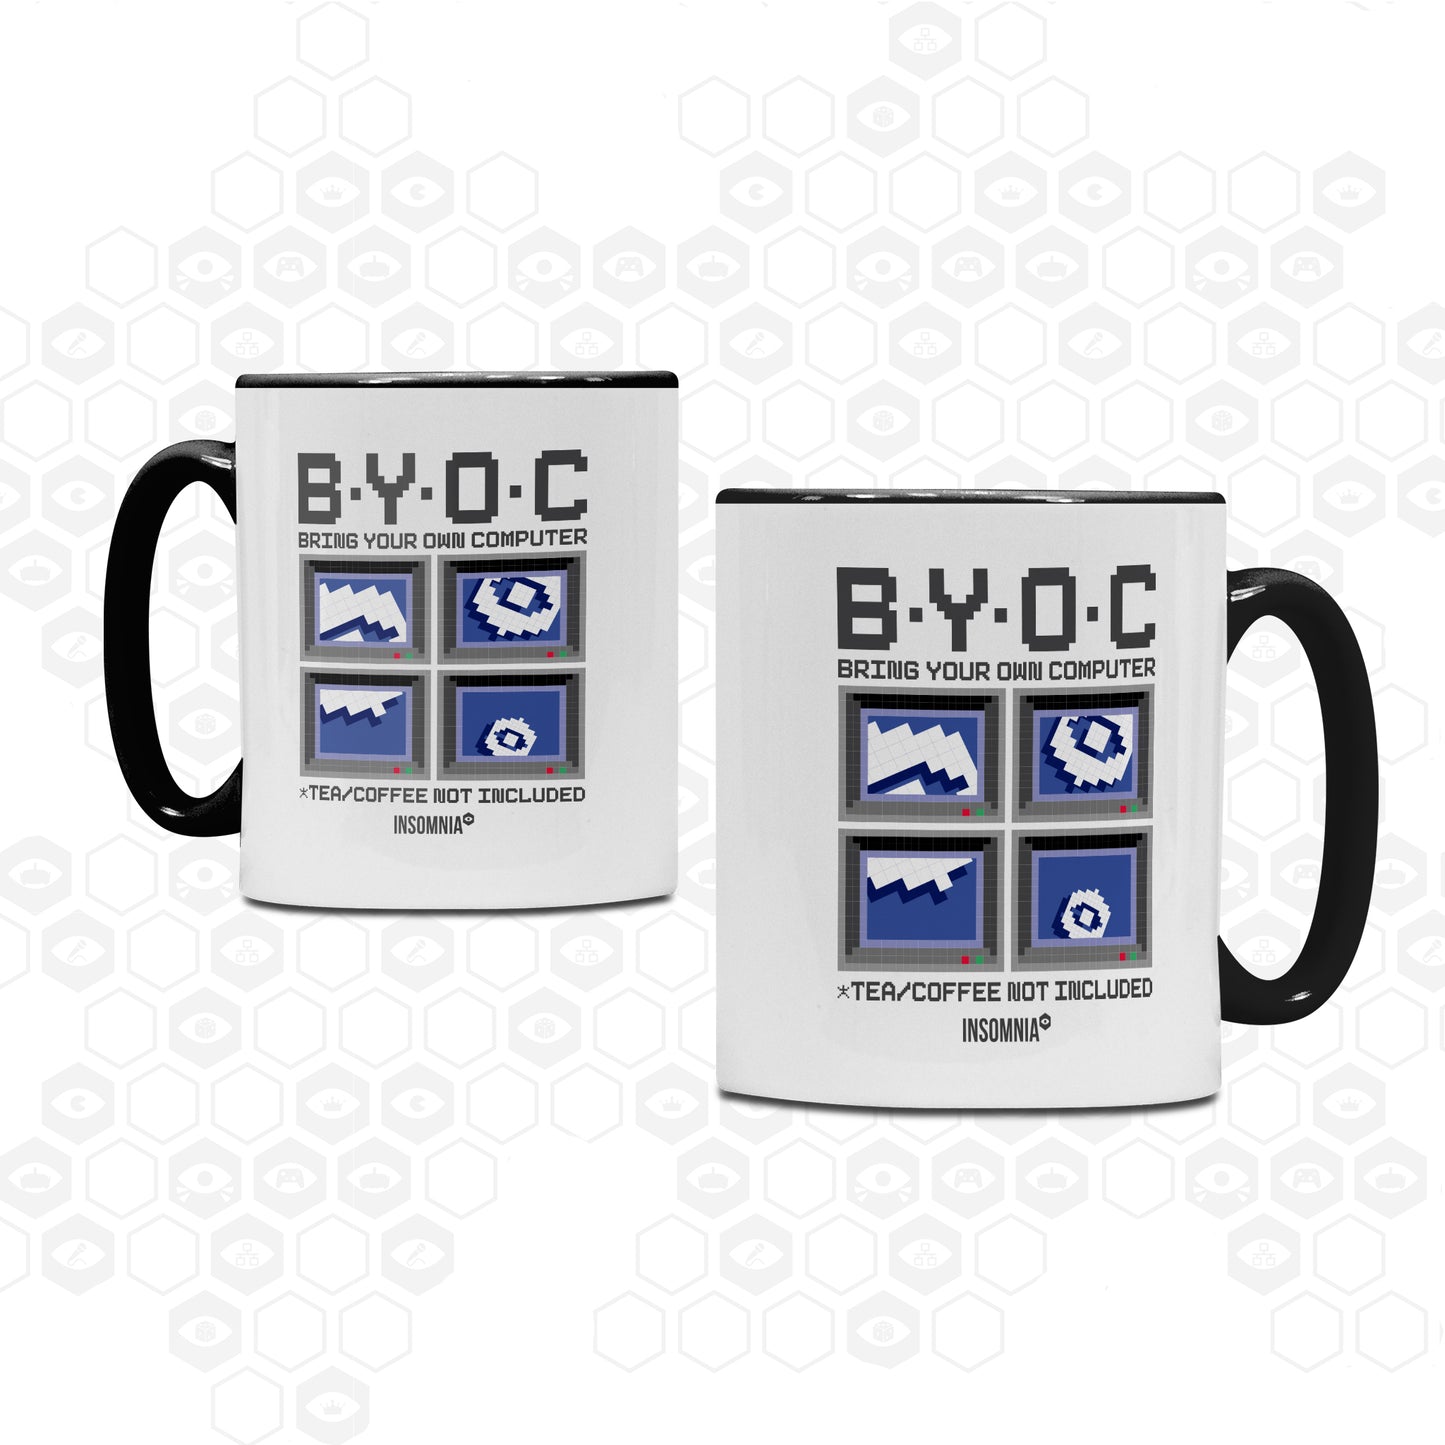 Insomnia i68 BYOC mug with black trim and handles